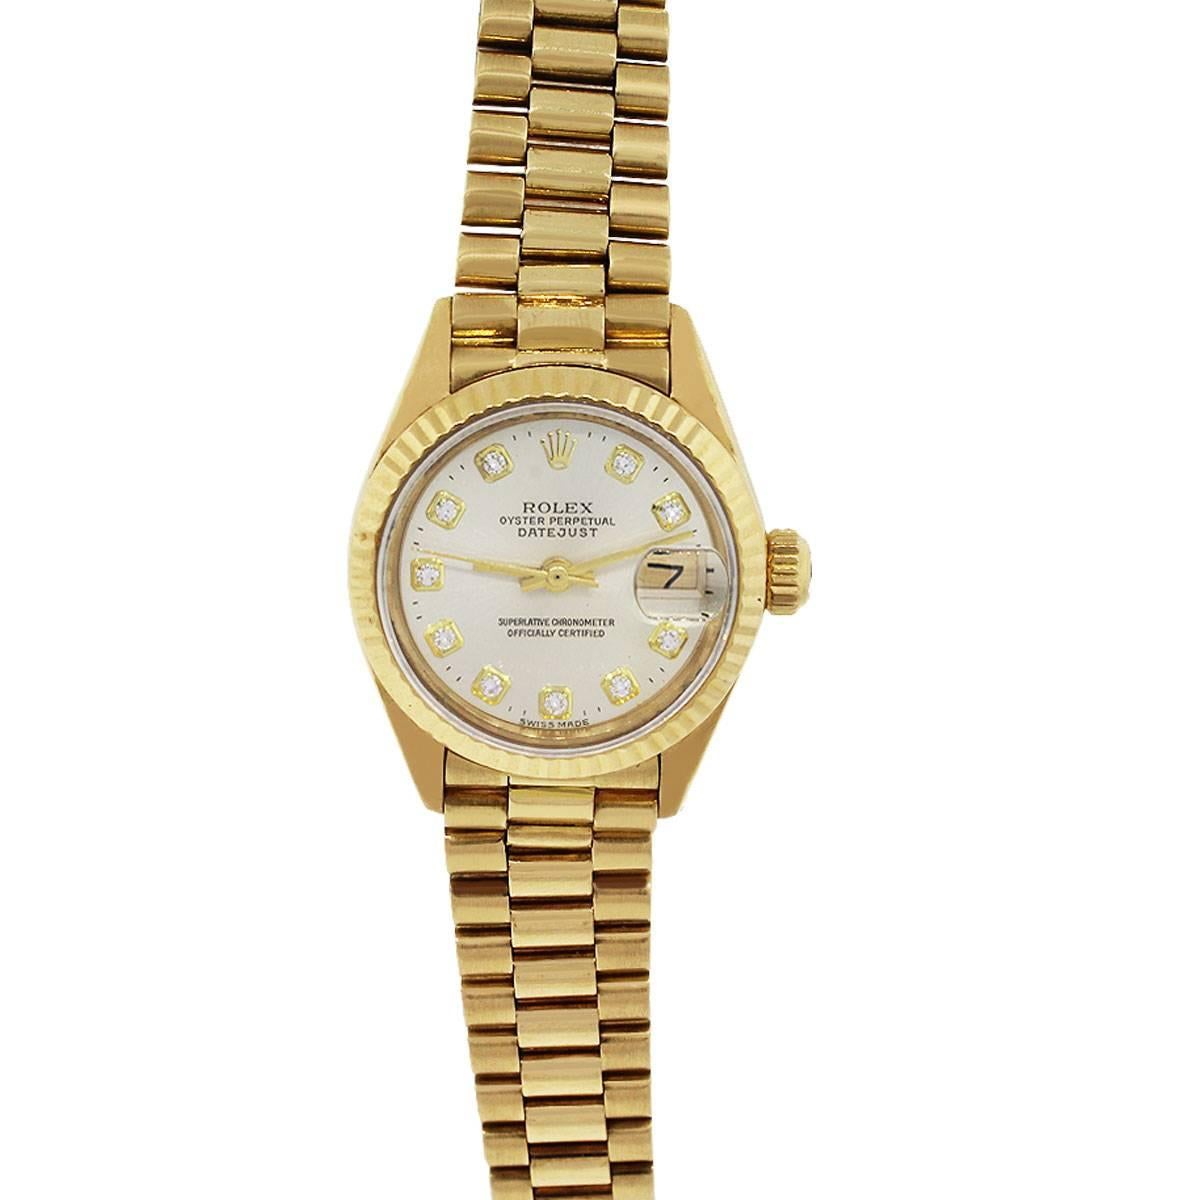 Rolex 6916 Datejust Champagne Diamond Dial Ladies Watch